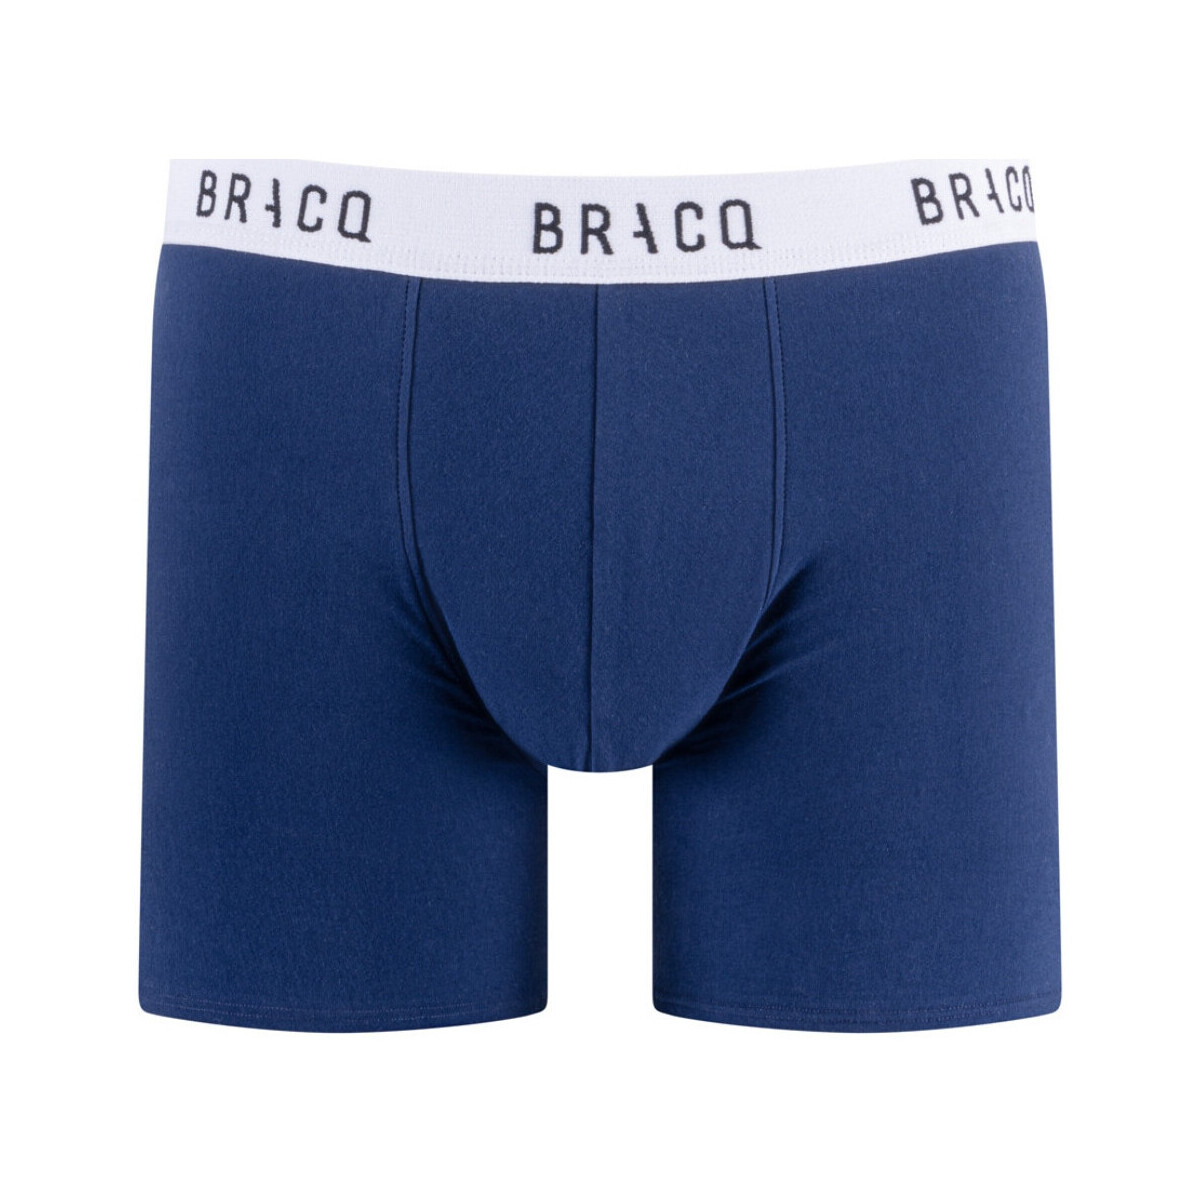 Sous-vêtements Homme Boxers Louisa Bracq Basic Range Bleu